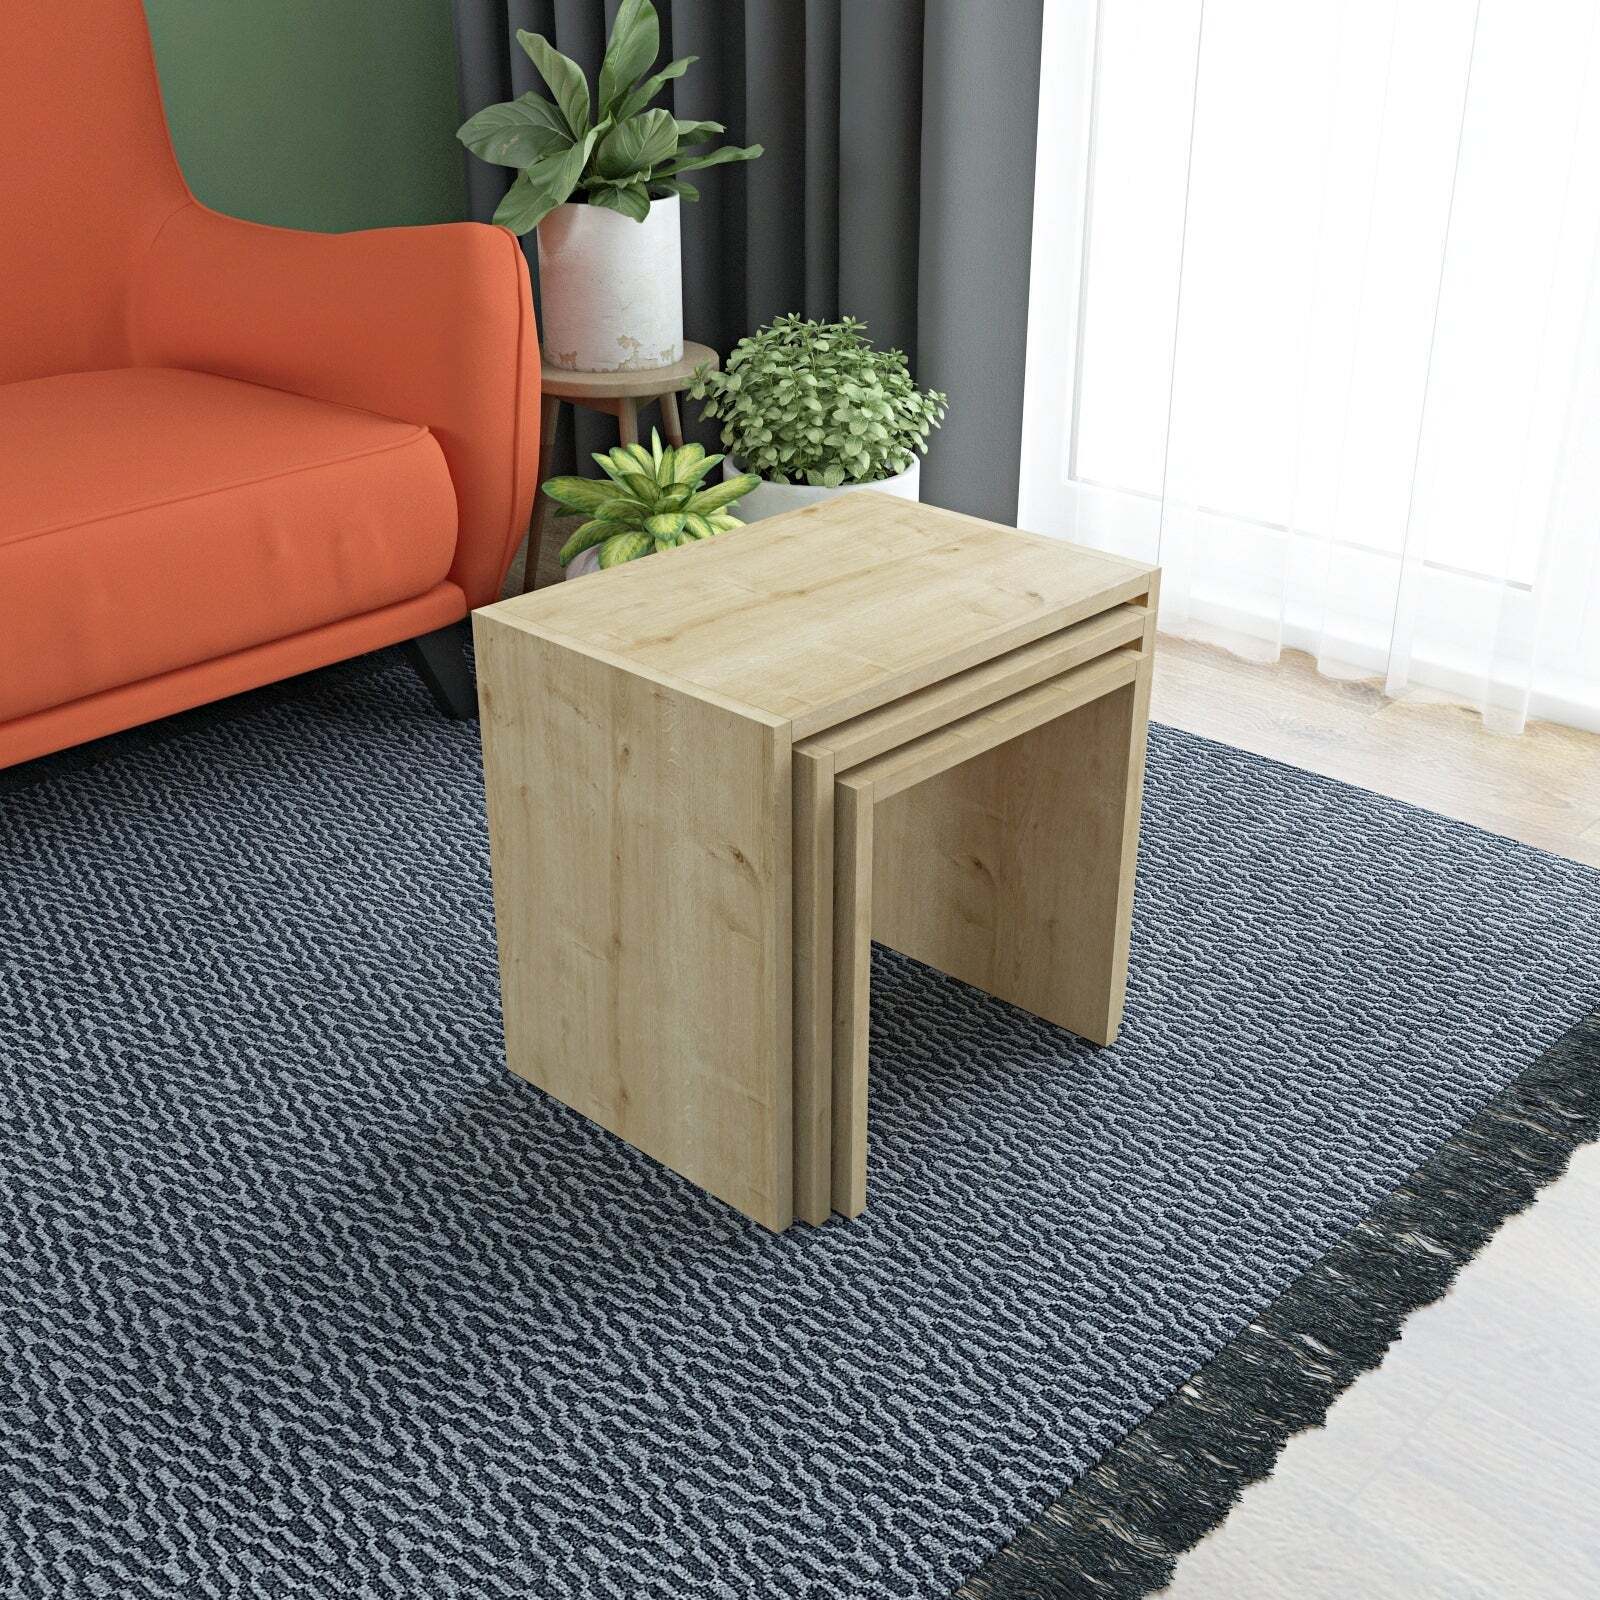 Square, minimalist coffee table with stools underneath 